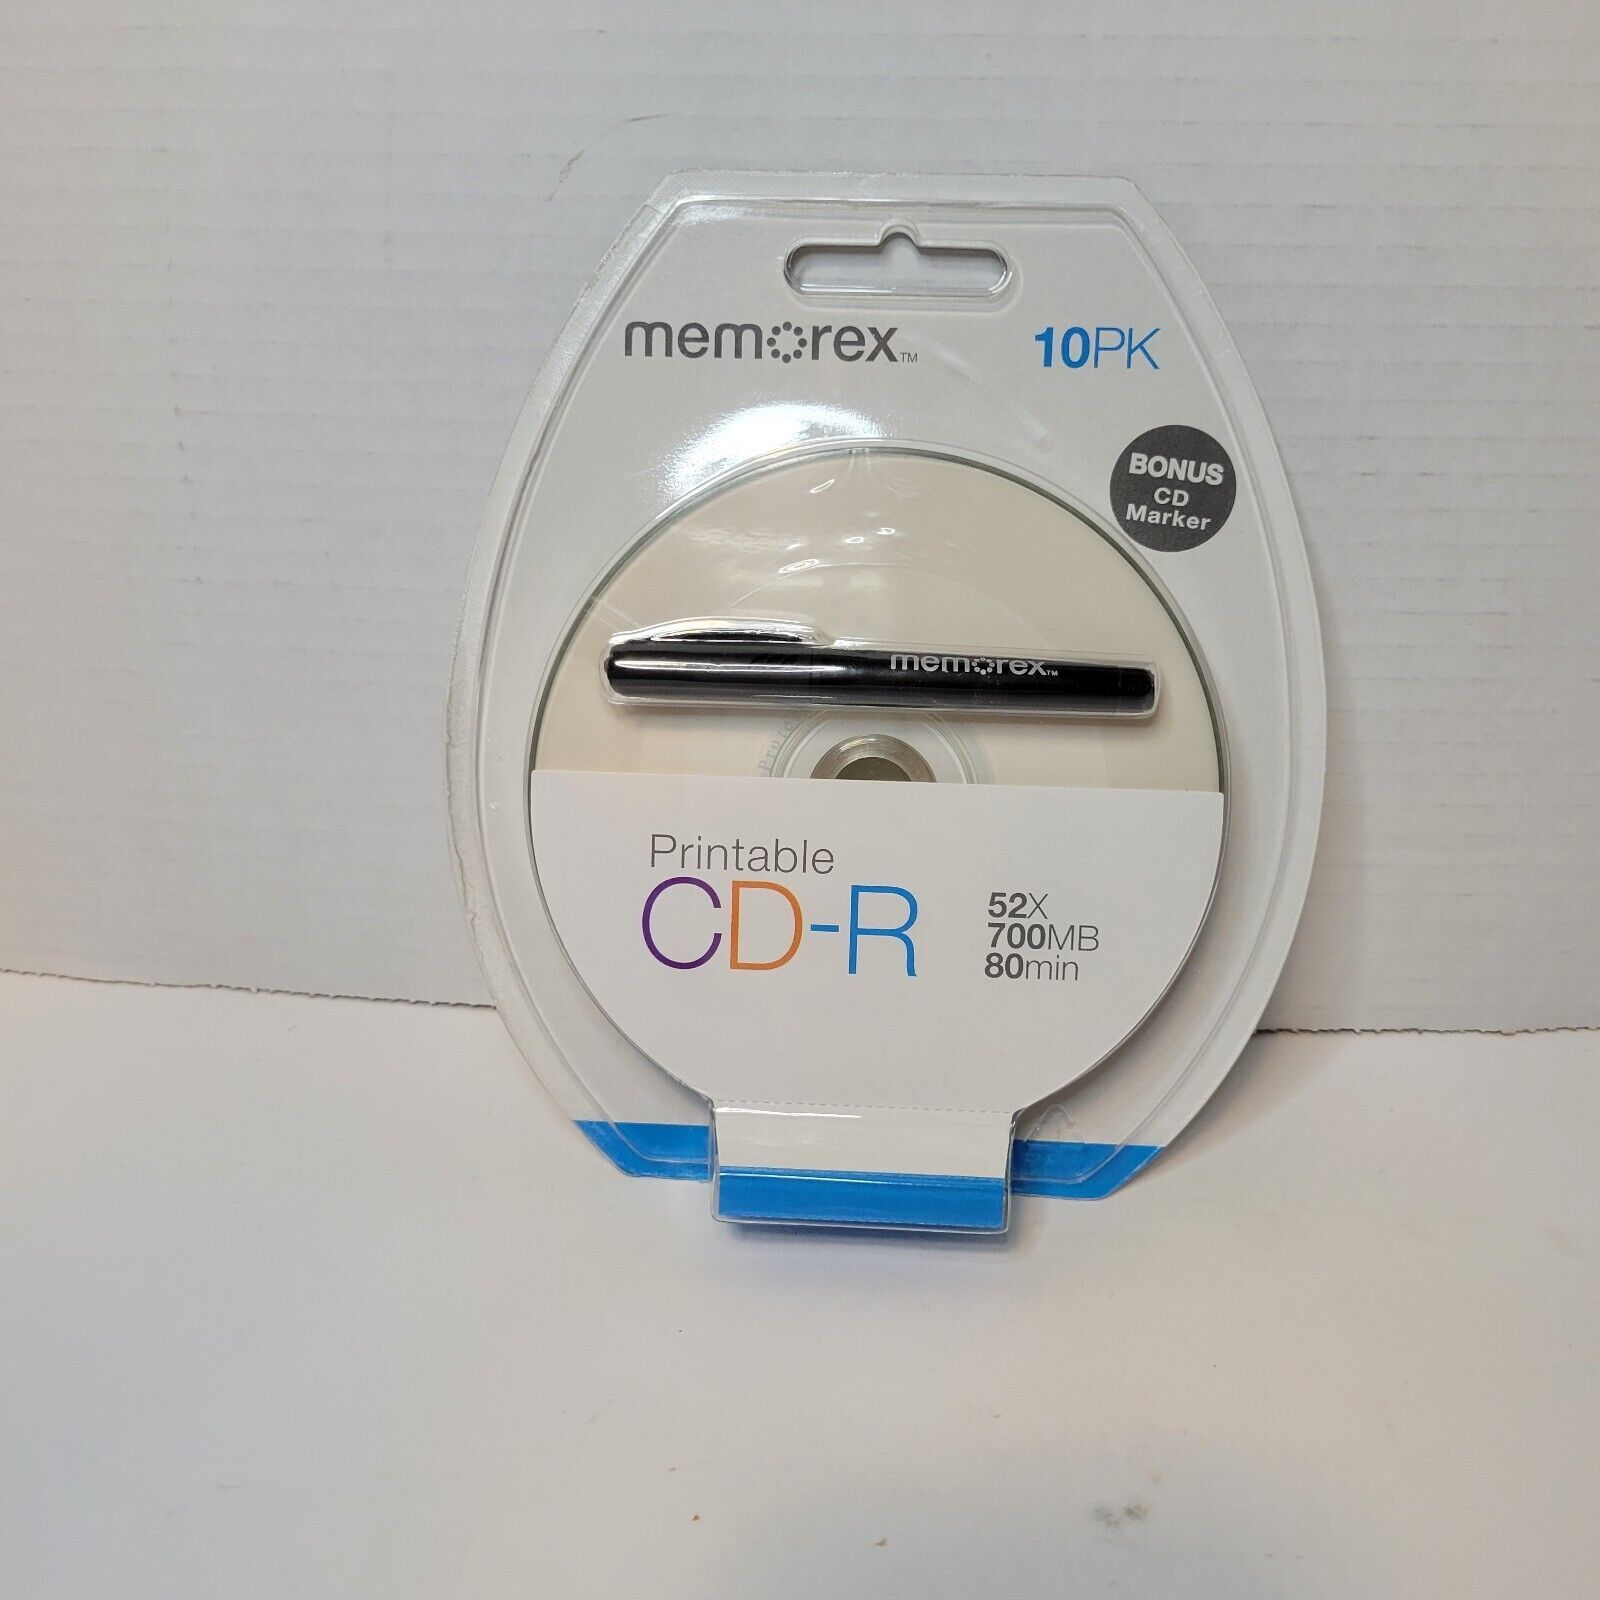 Memorex 10 Pack PK Printable CD-R CDR 52X 700MB 80 MIN Minute + Marker Pack NEW - $11.25